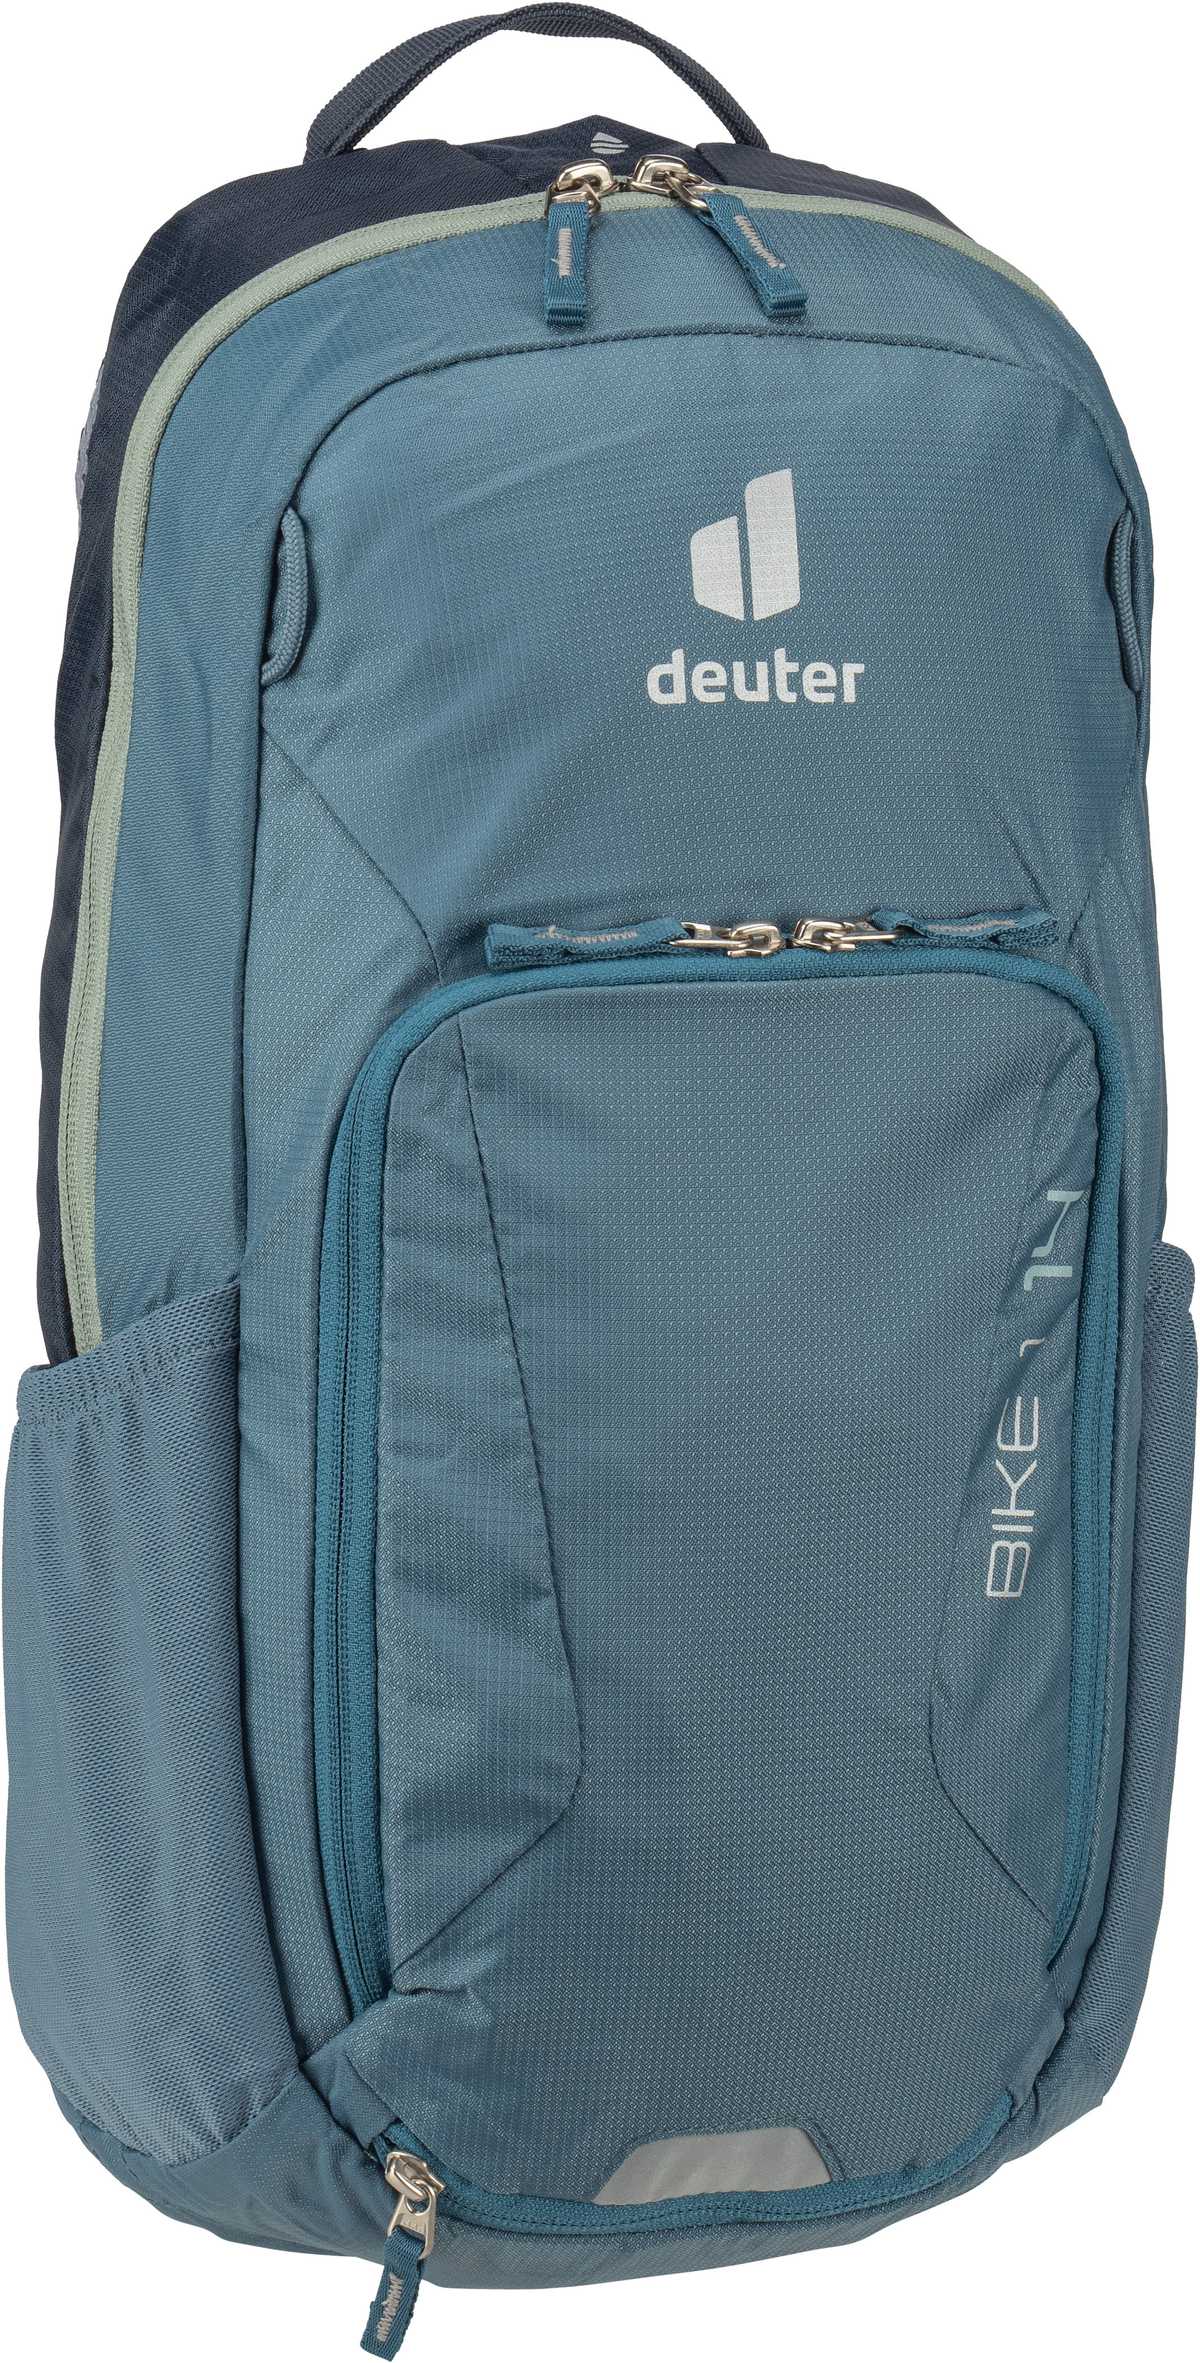 Deuter Bike I 14  in Blau (14 Liter), Rucksack / Backpack